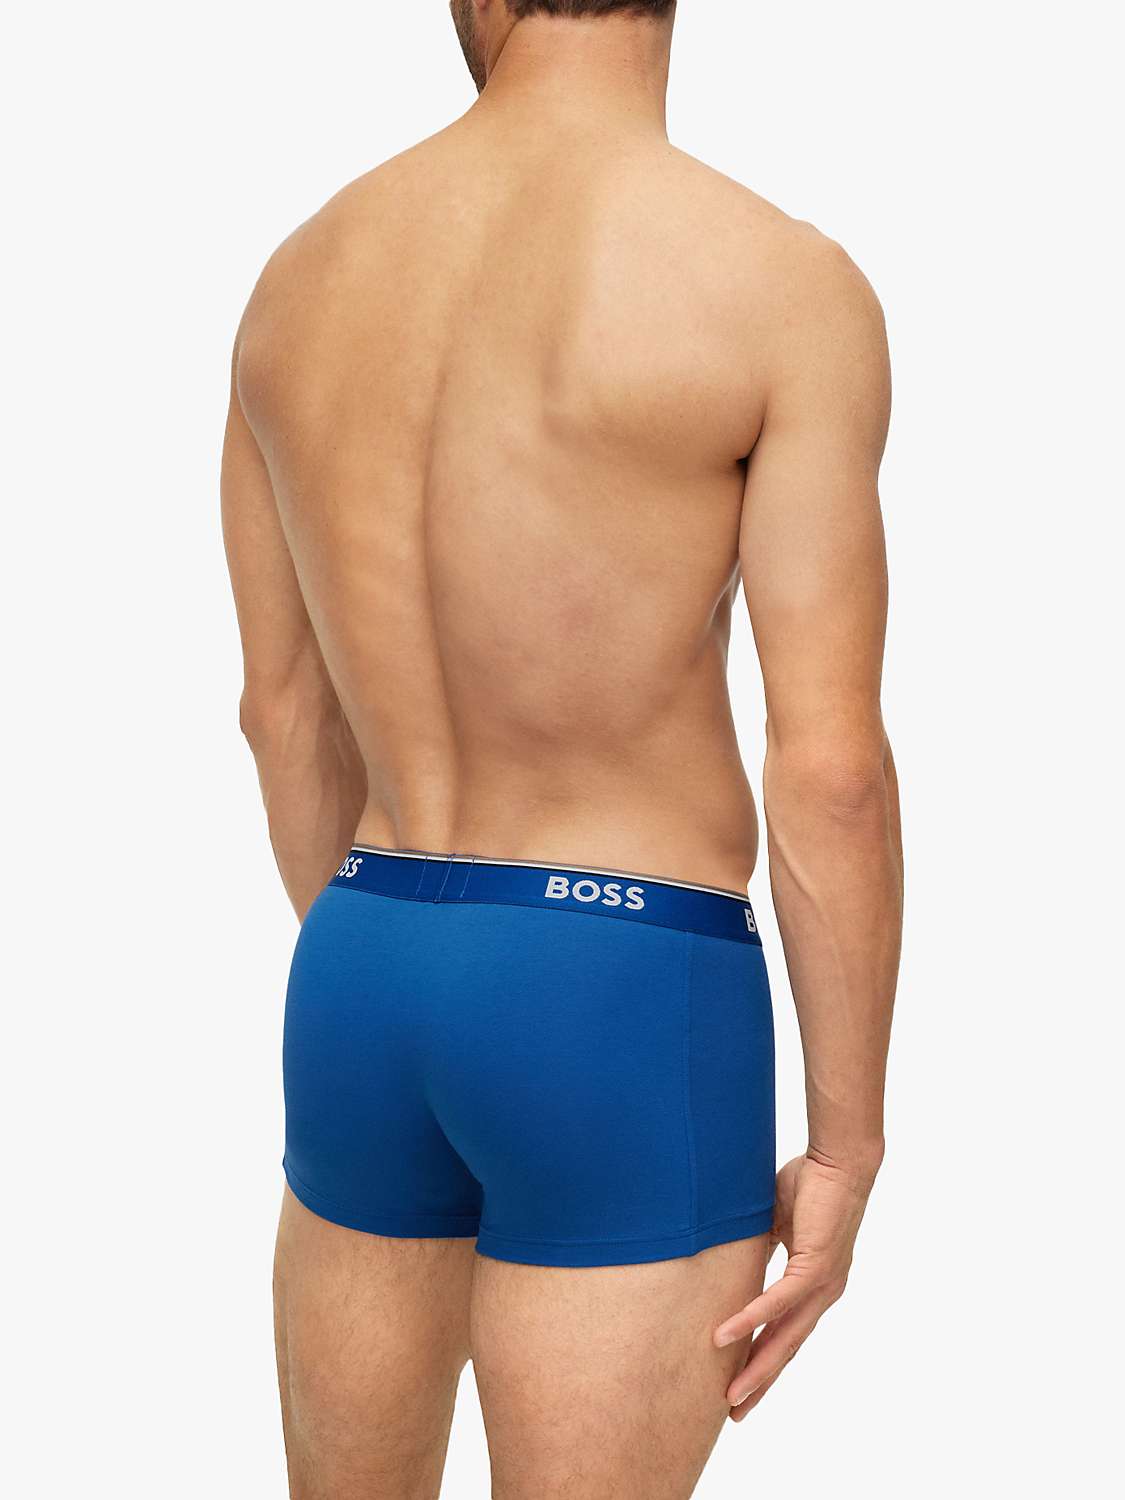 Buy BOSS Power Cotton Logo Waistband Trunks, Pack of 3, Open Blue Online at johnlewis.com